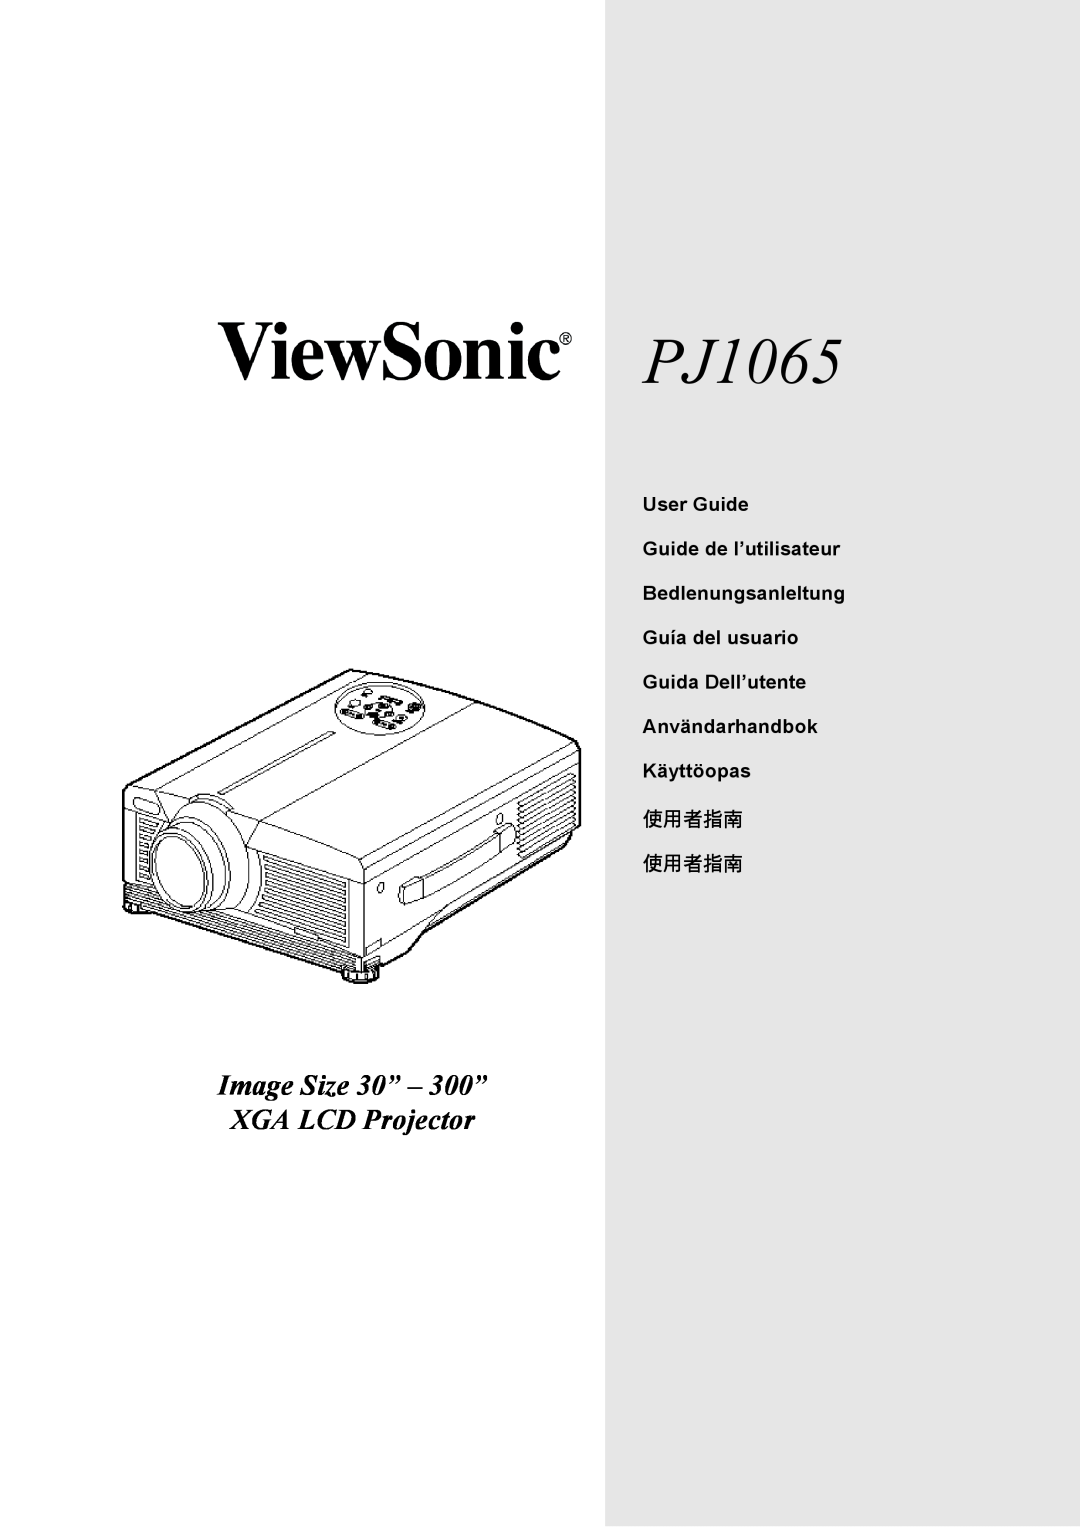 ViewSonic PJ1065 manual Image Size 30” - 300” XGA LCD Projector, User Guide Guide de l’utilisateur Bedlenungsanleltung 